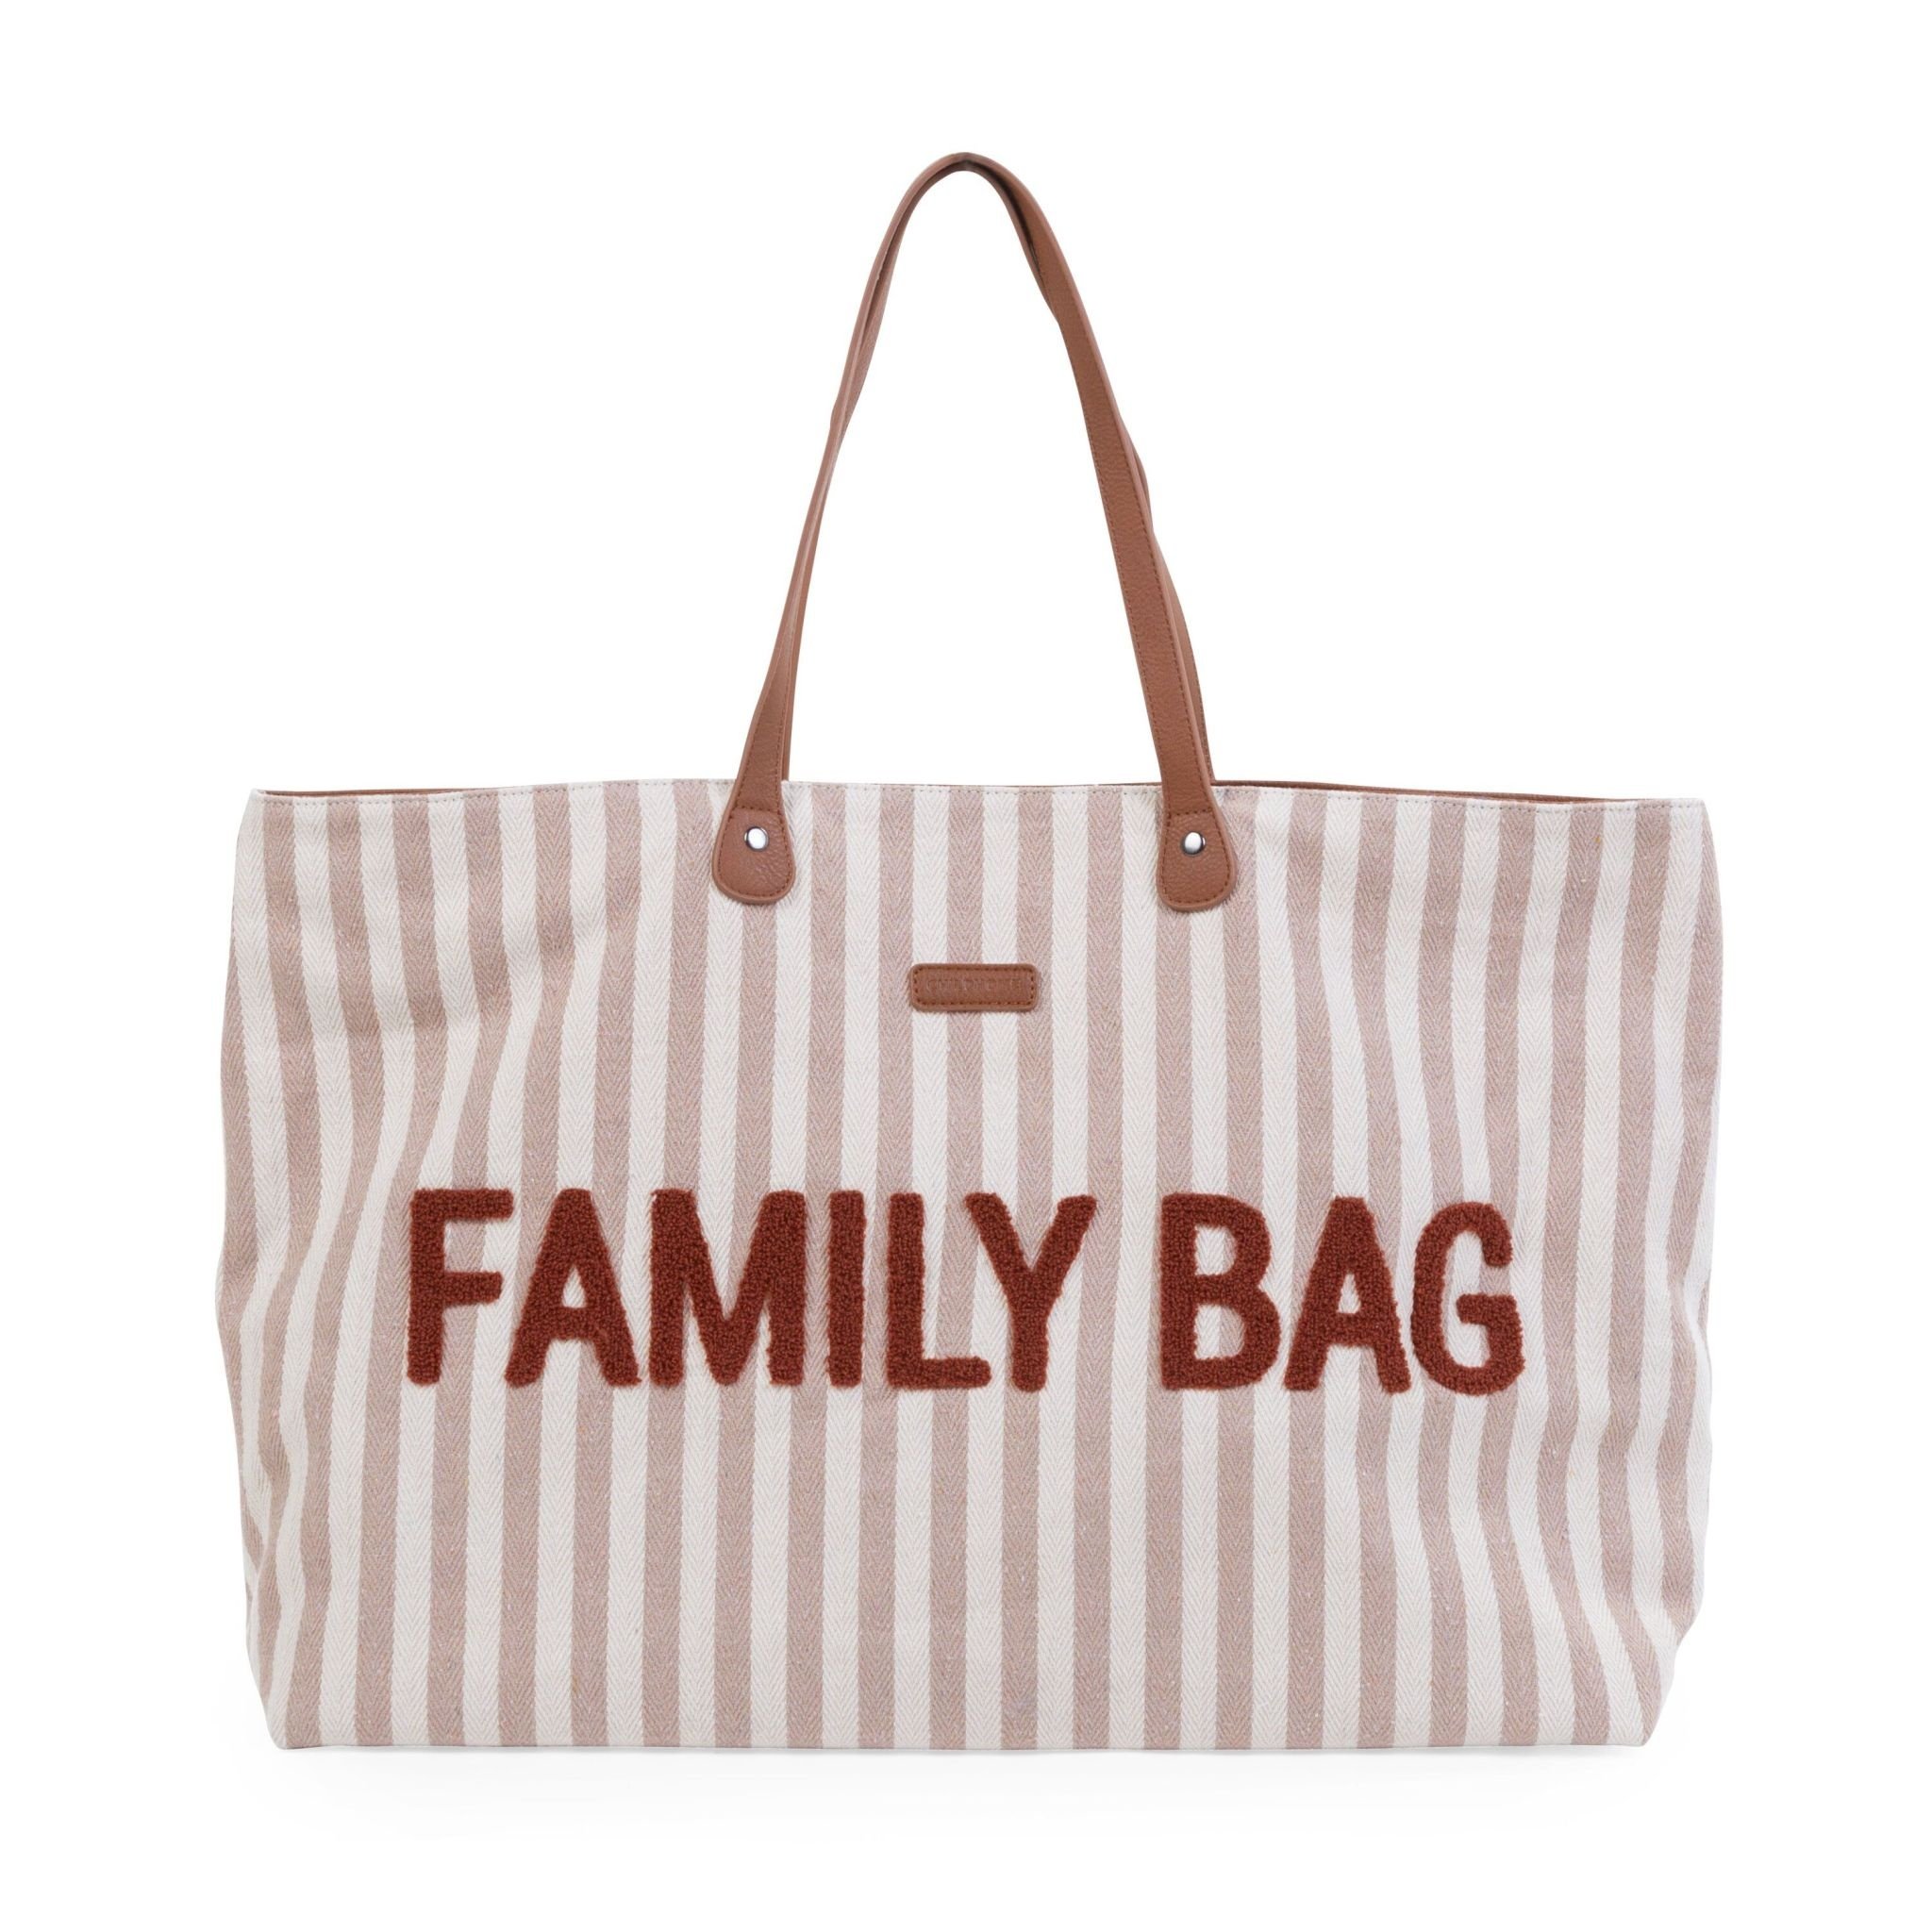 The Family Bag